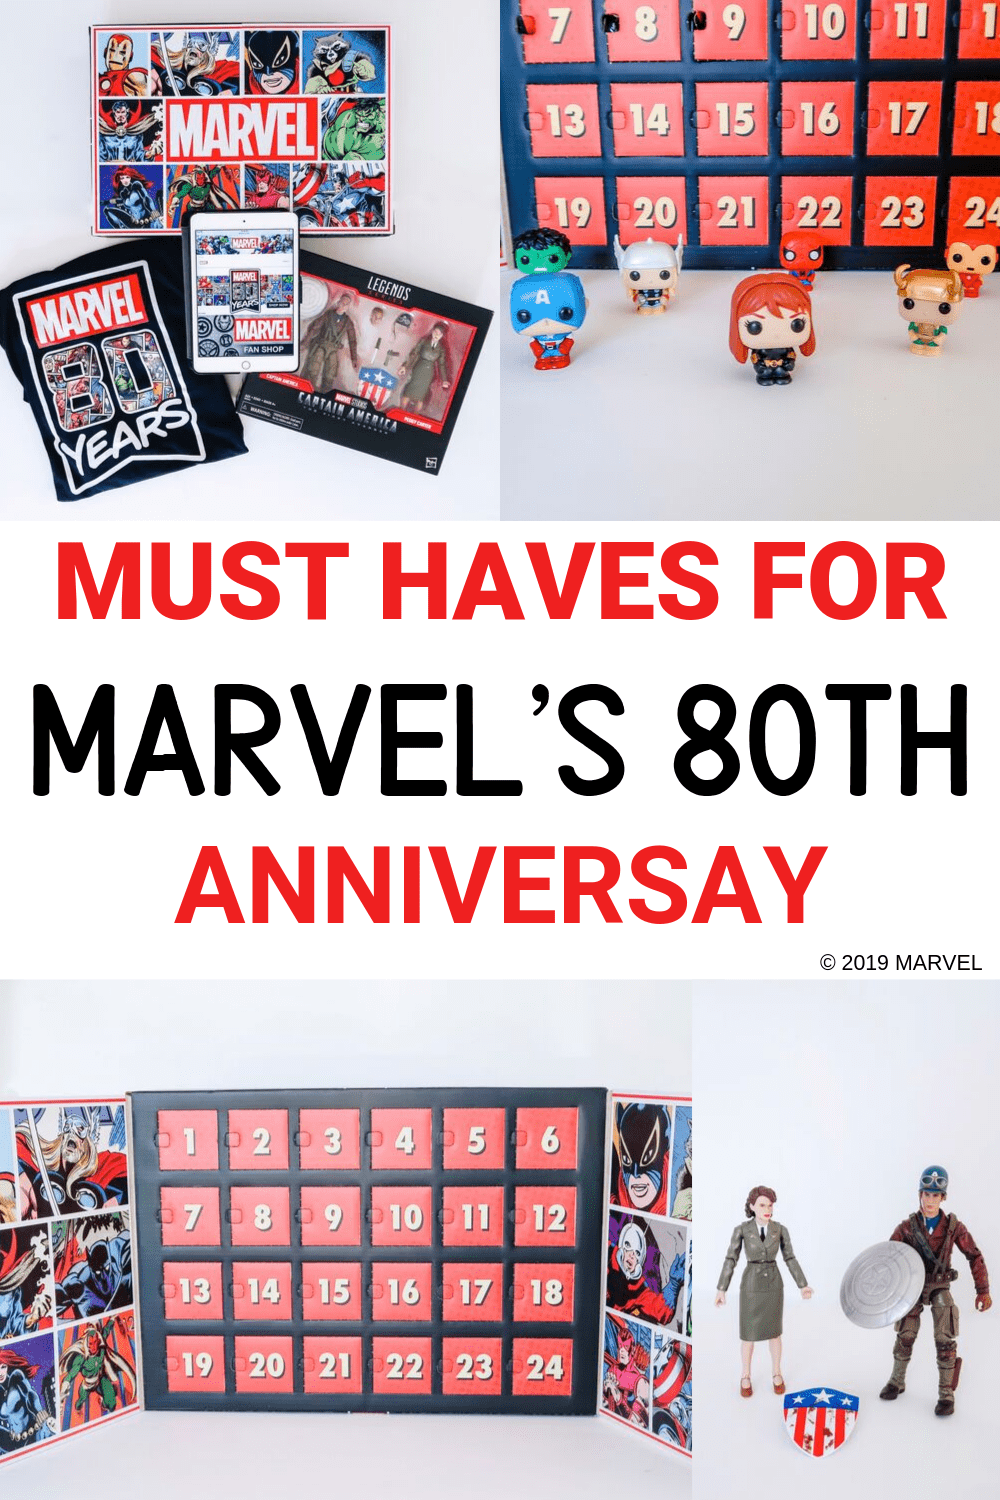 Celebrating Marvel's 80th Anniversary